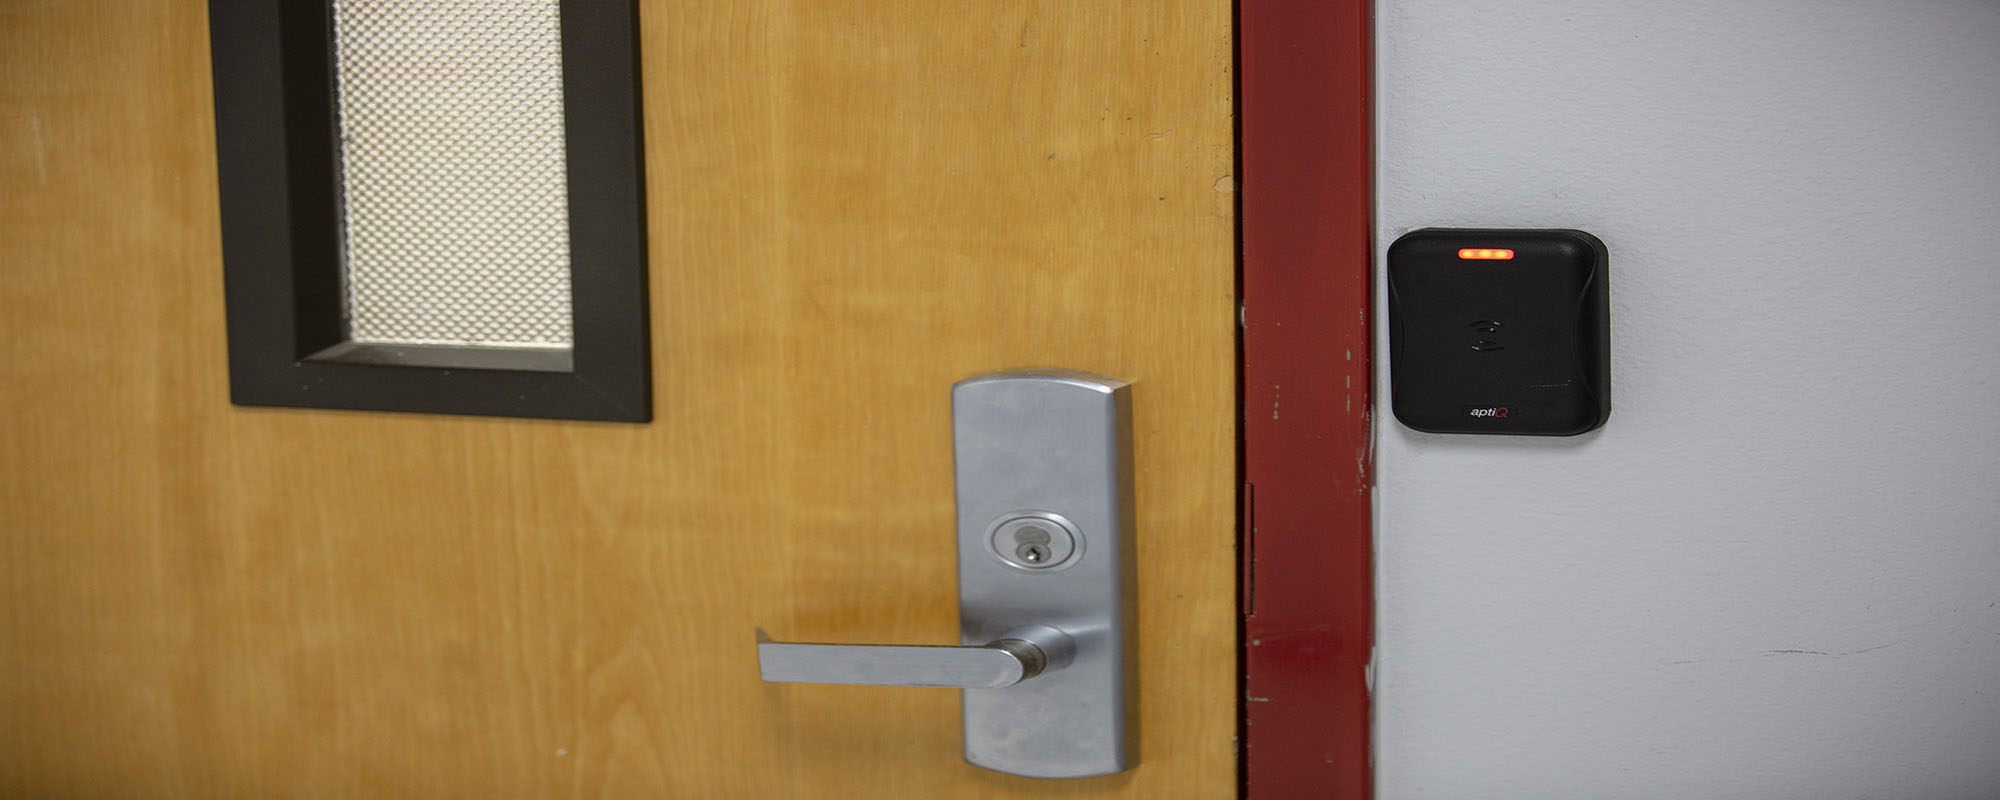 A proximity access sensor outside a classroom at UNLV.